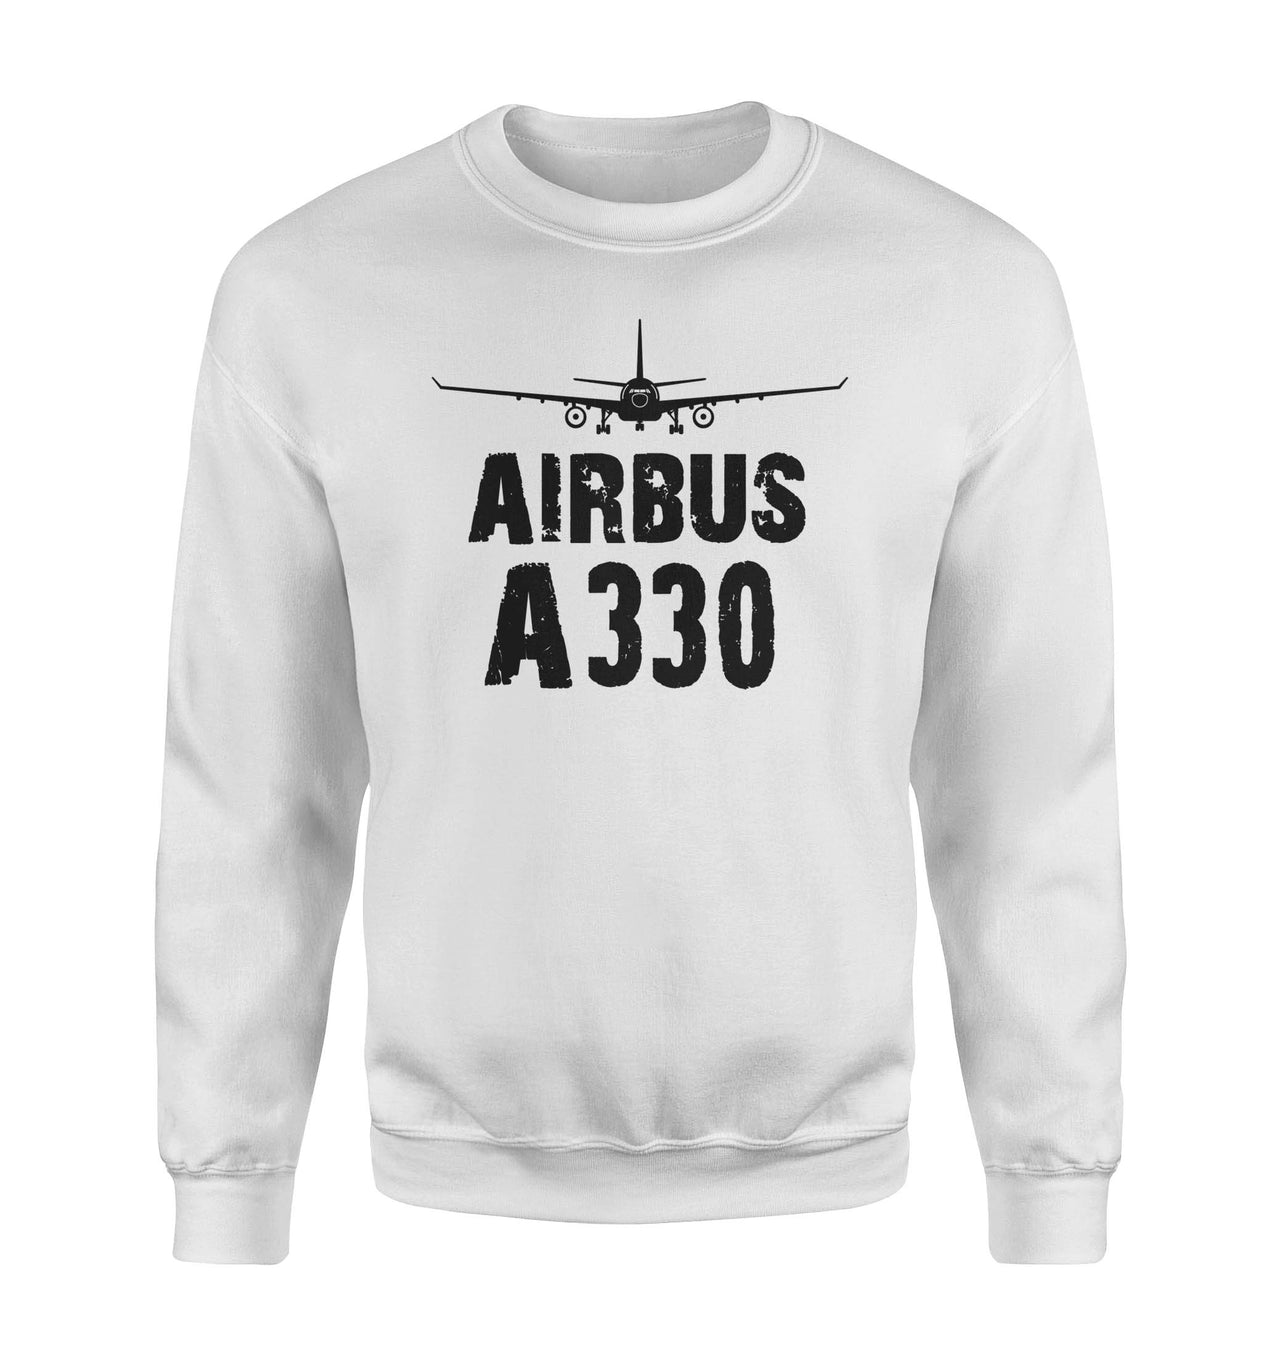 Airbus A330 & Plane Designed Sweatshirts